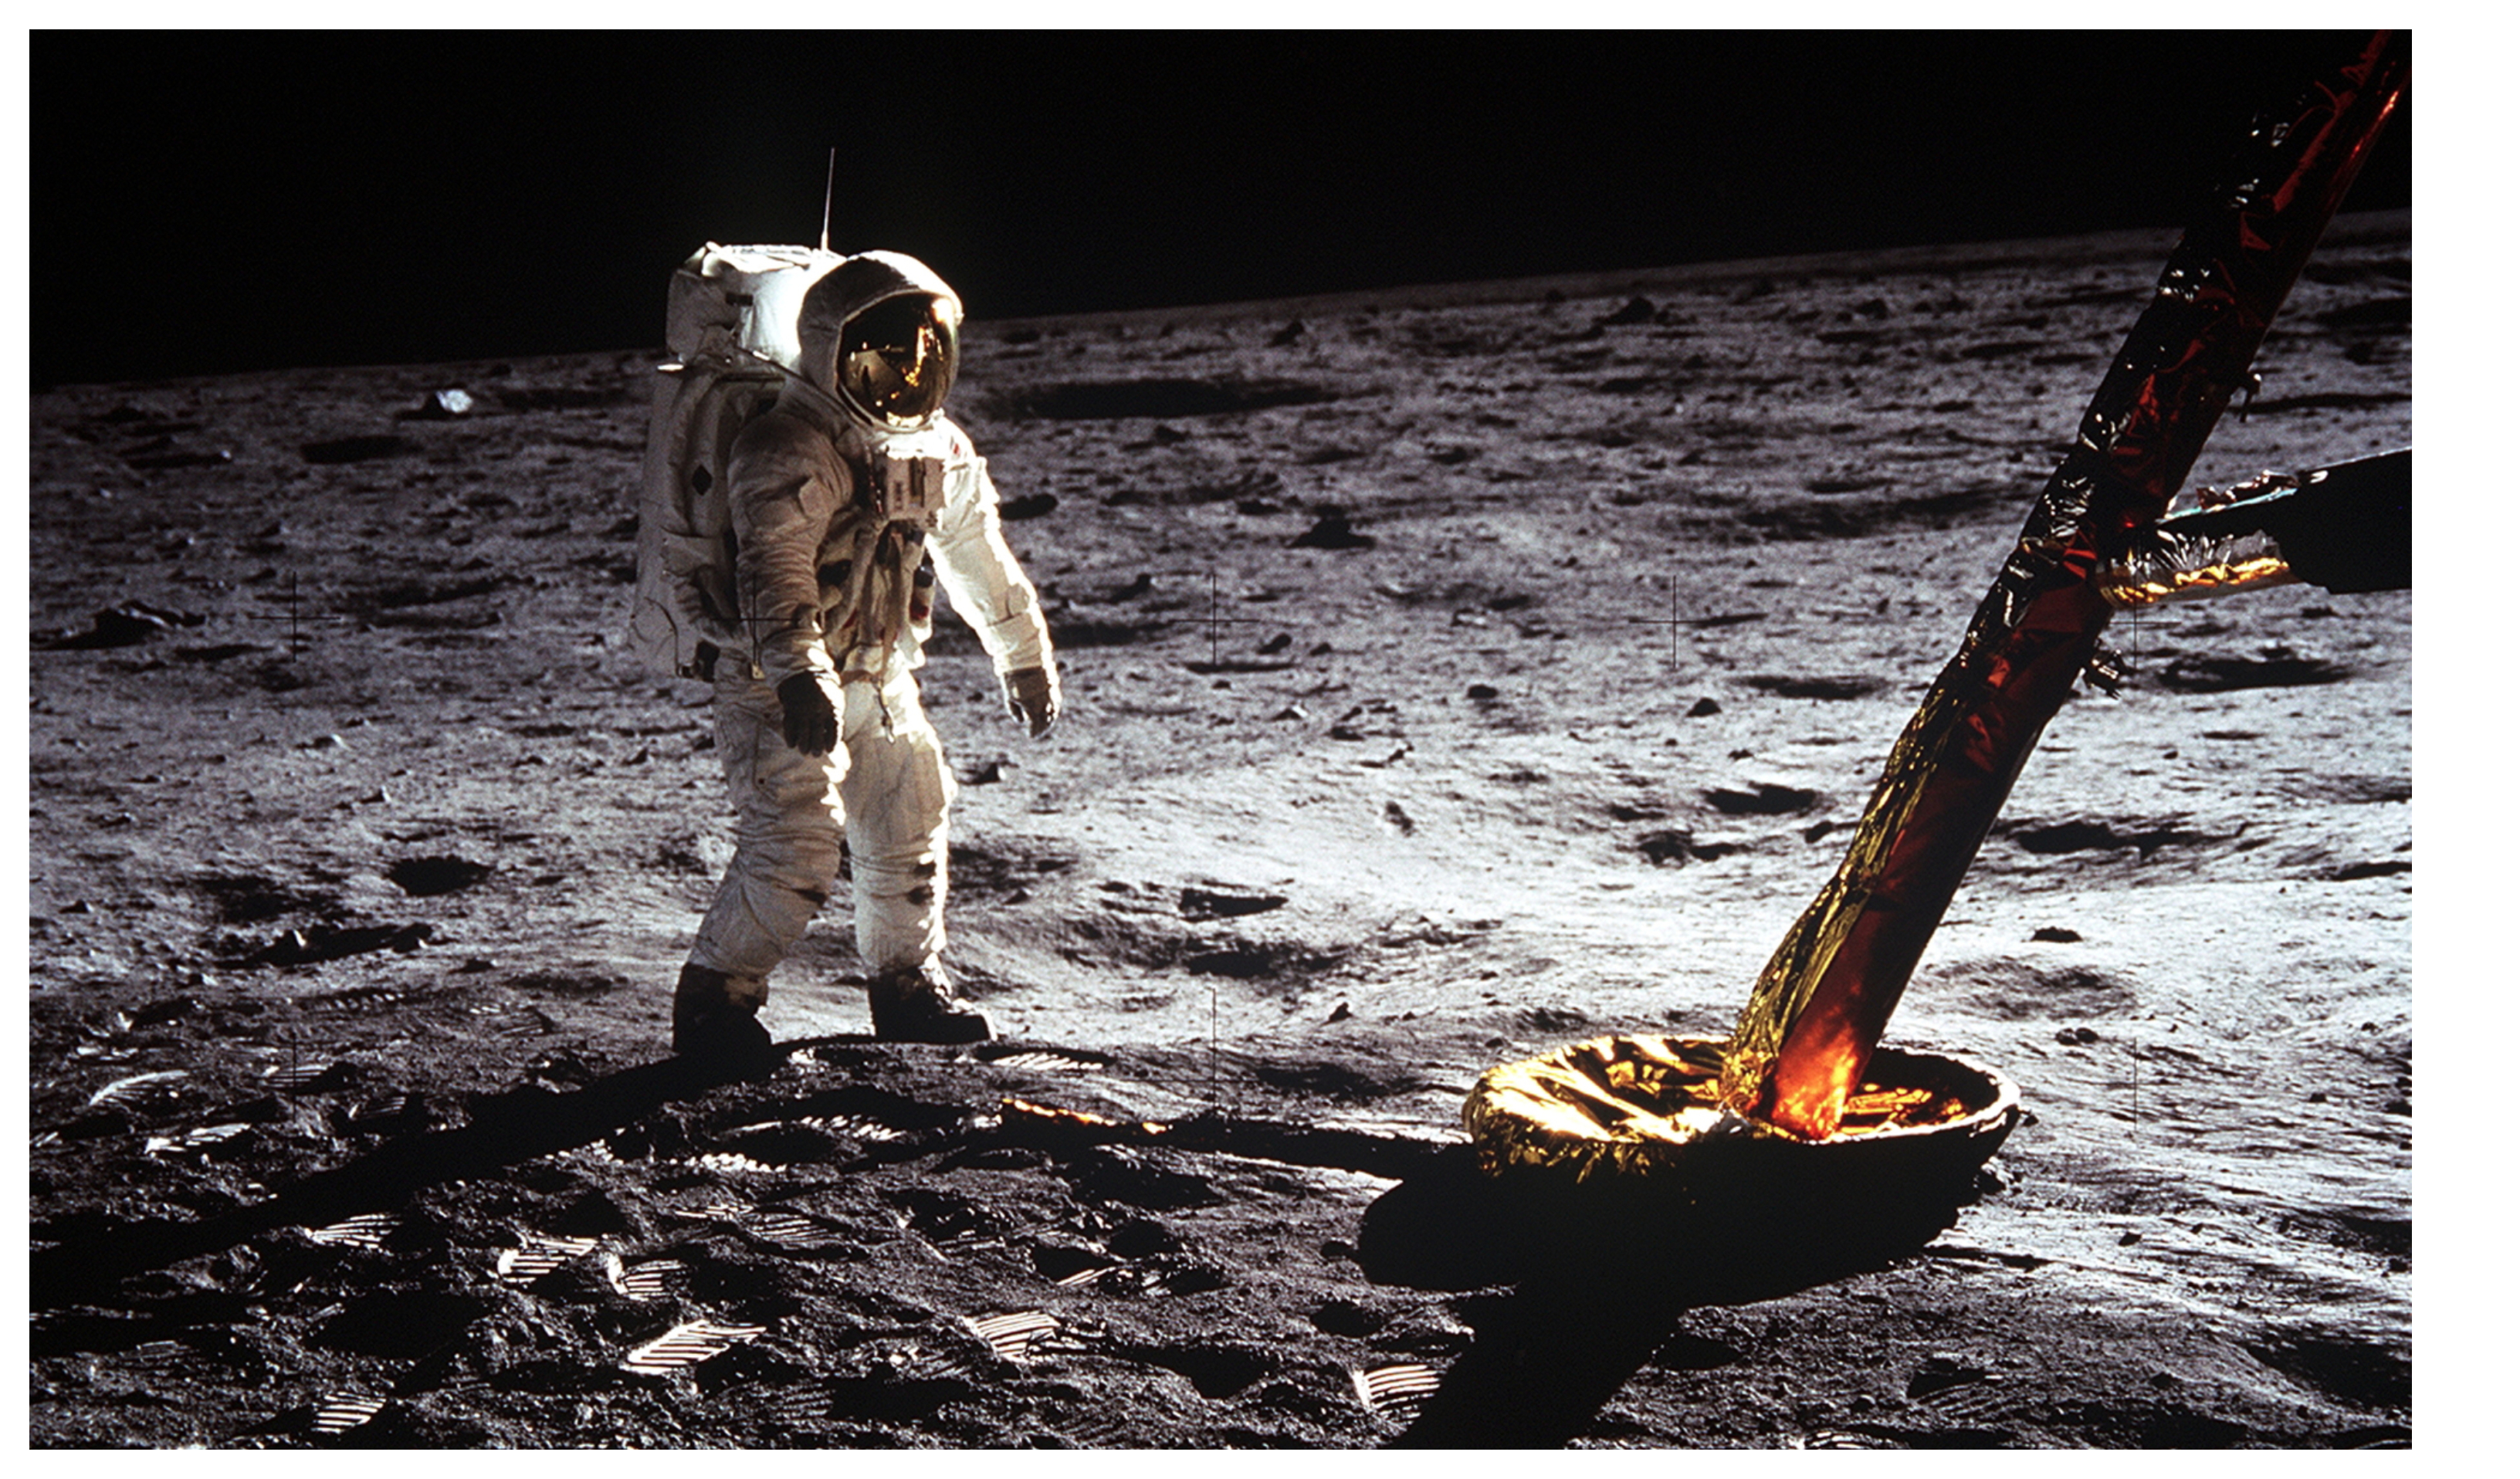 Man landed on the moon. Apollo 11 2019.